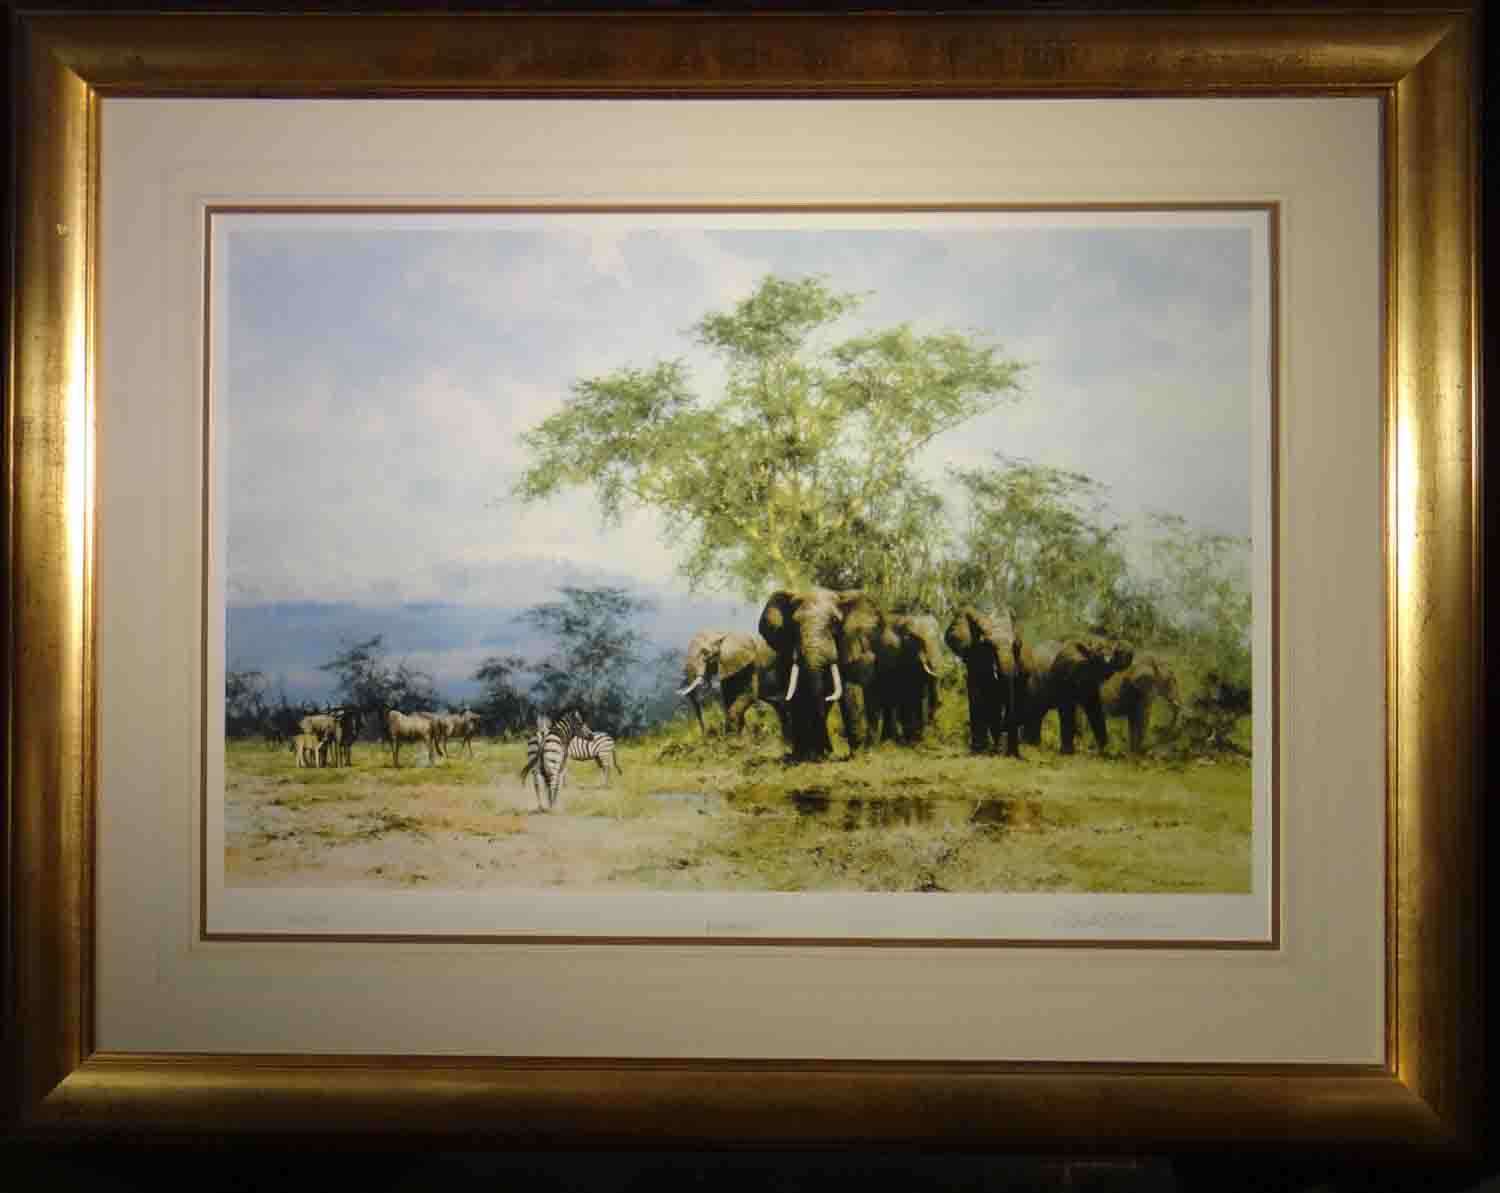 david shepherd signed limited edition print Amboseli